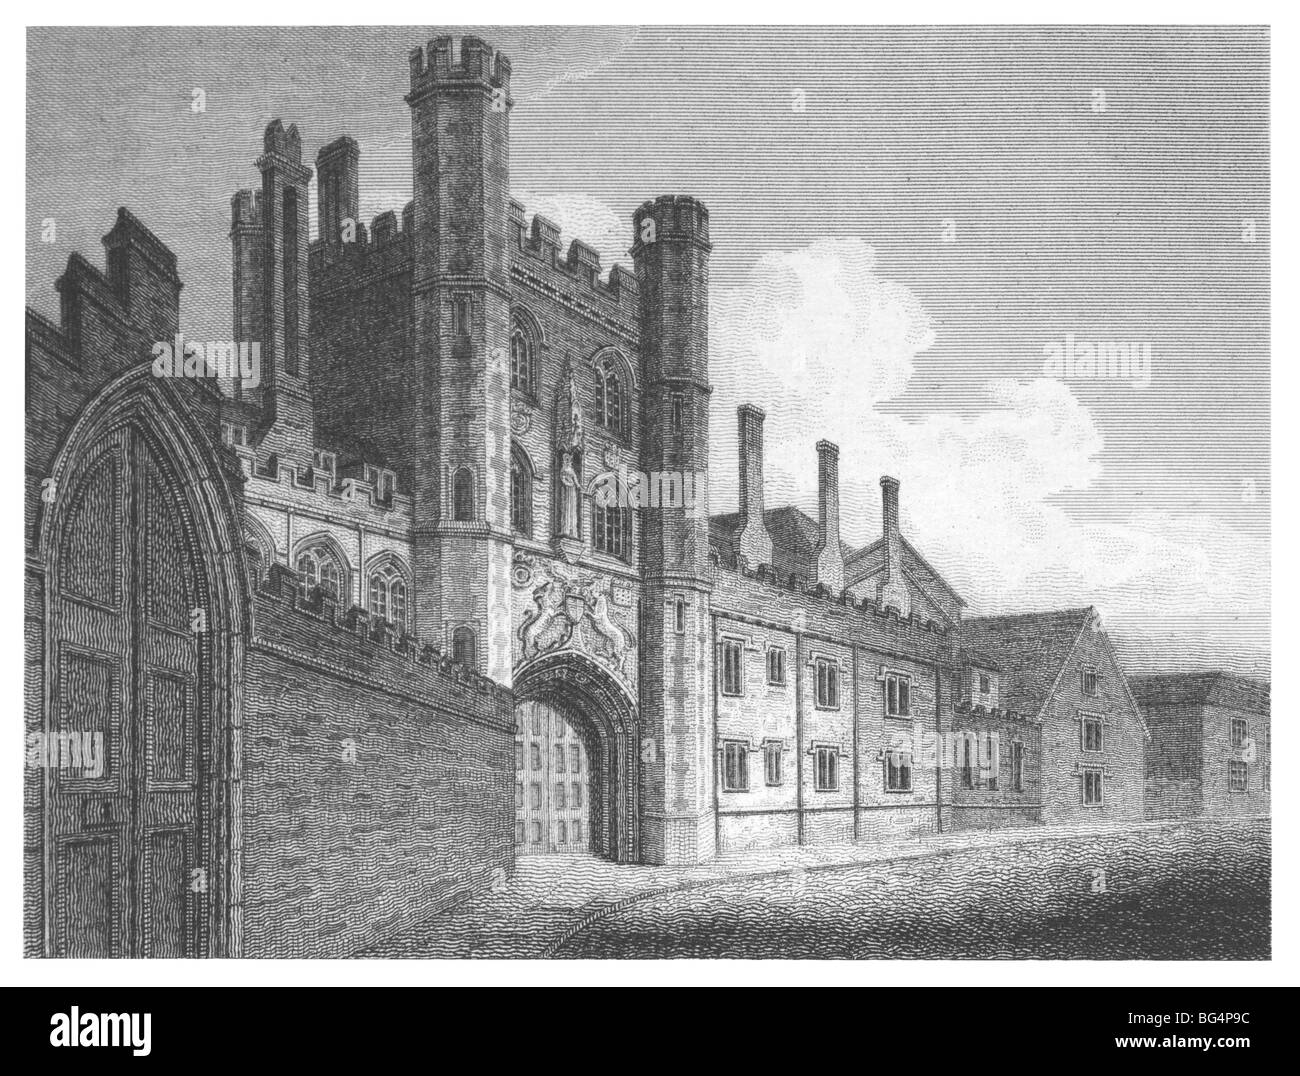 St John's College, Cambridge - entrada Foto de stock